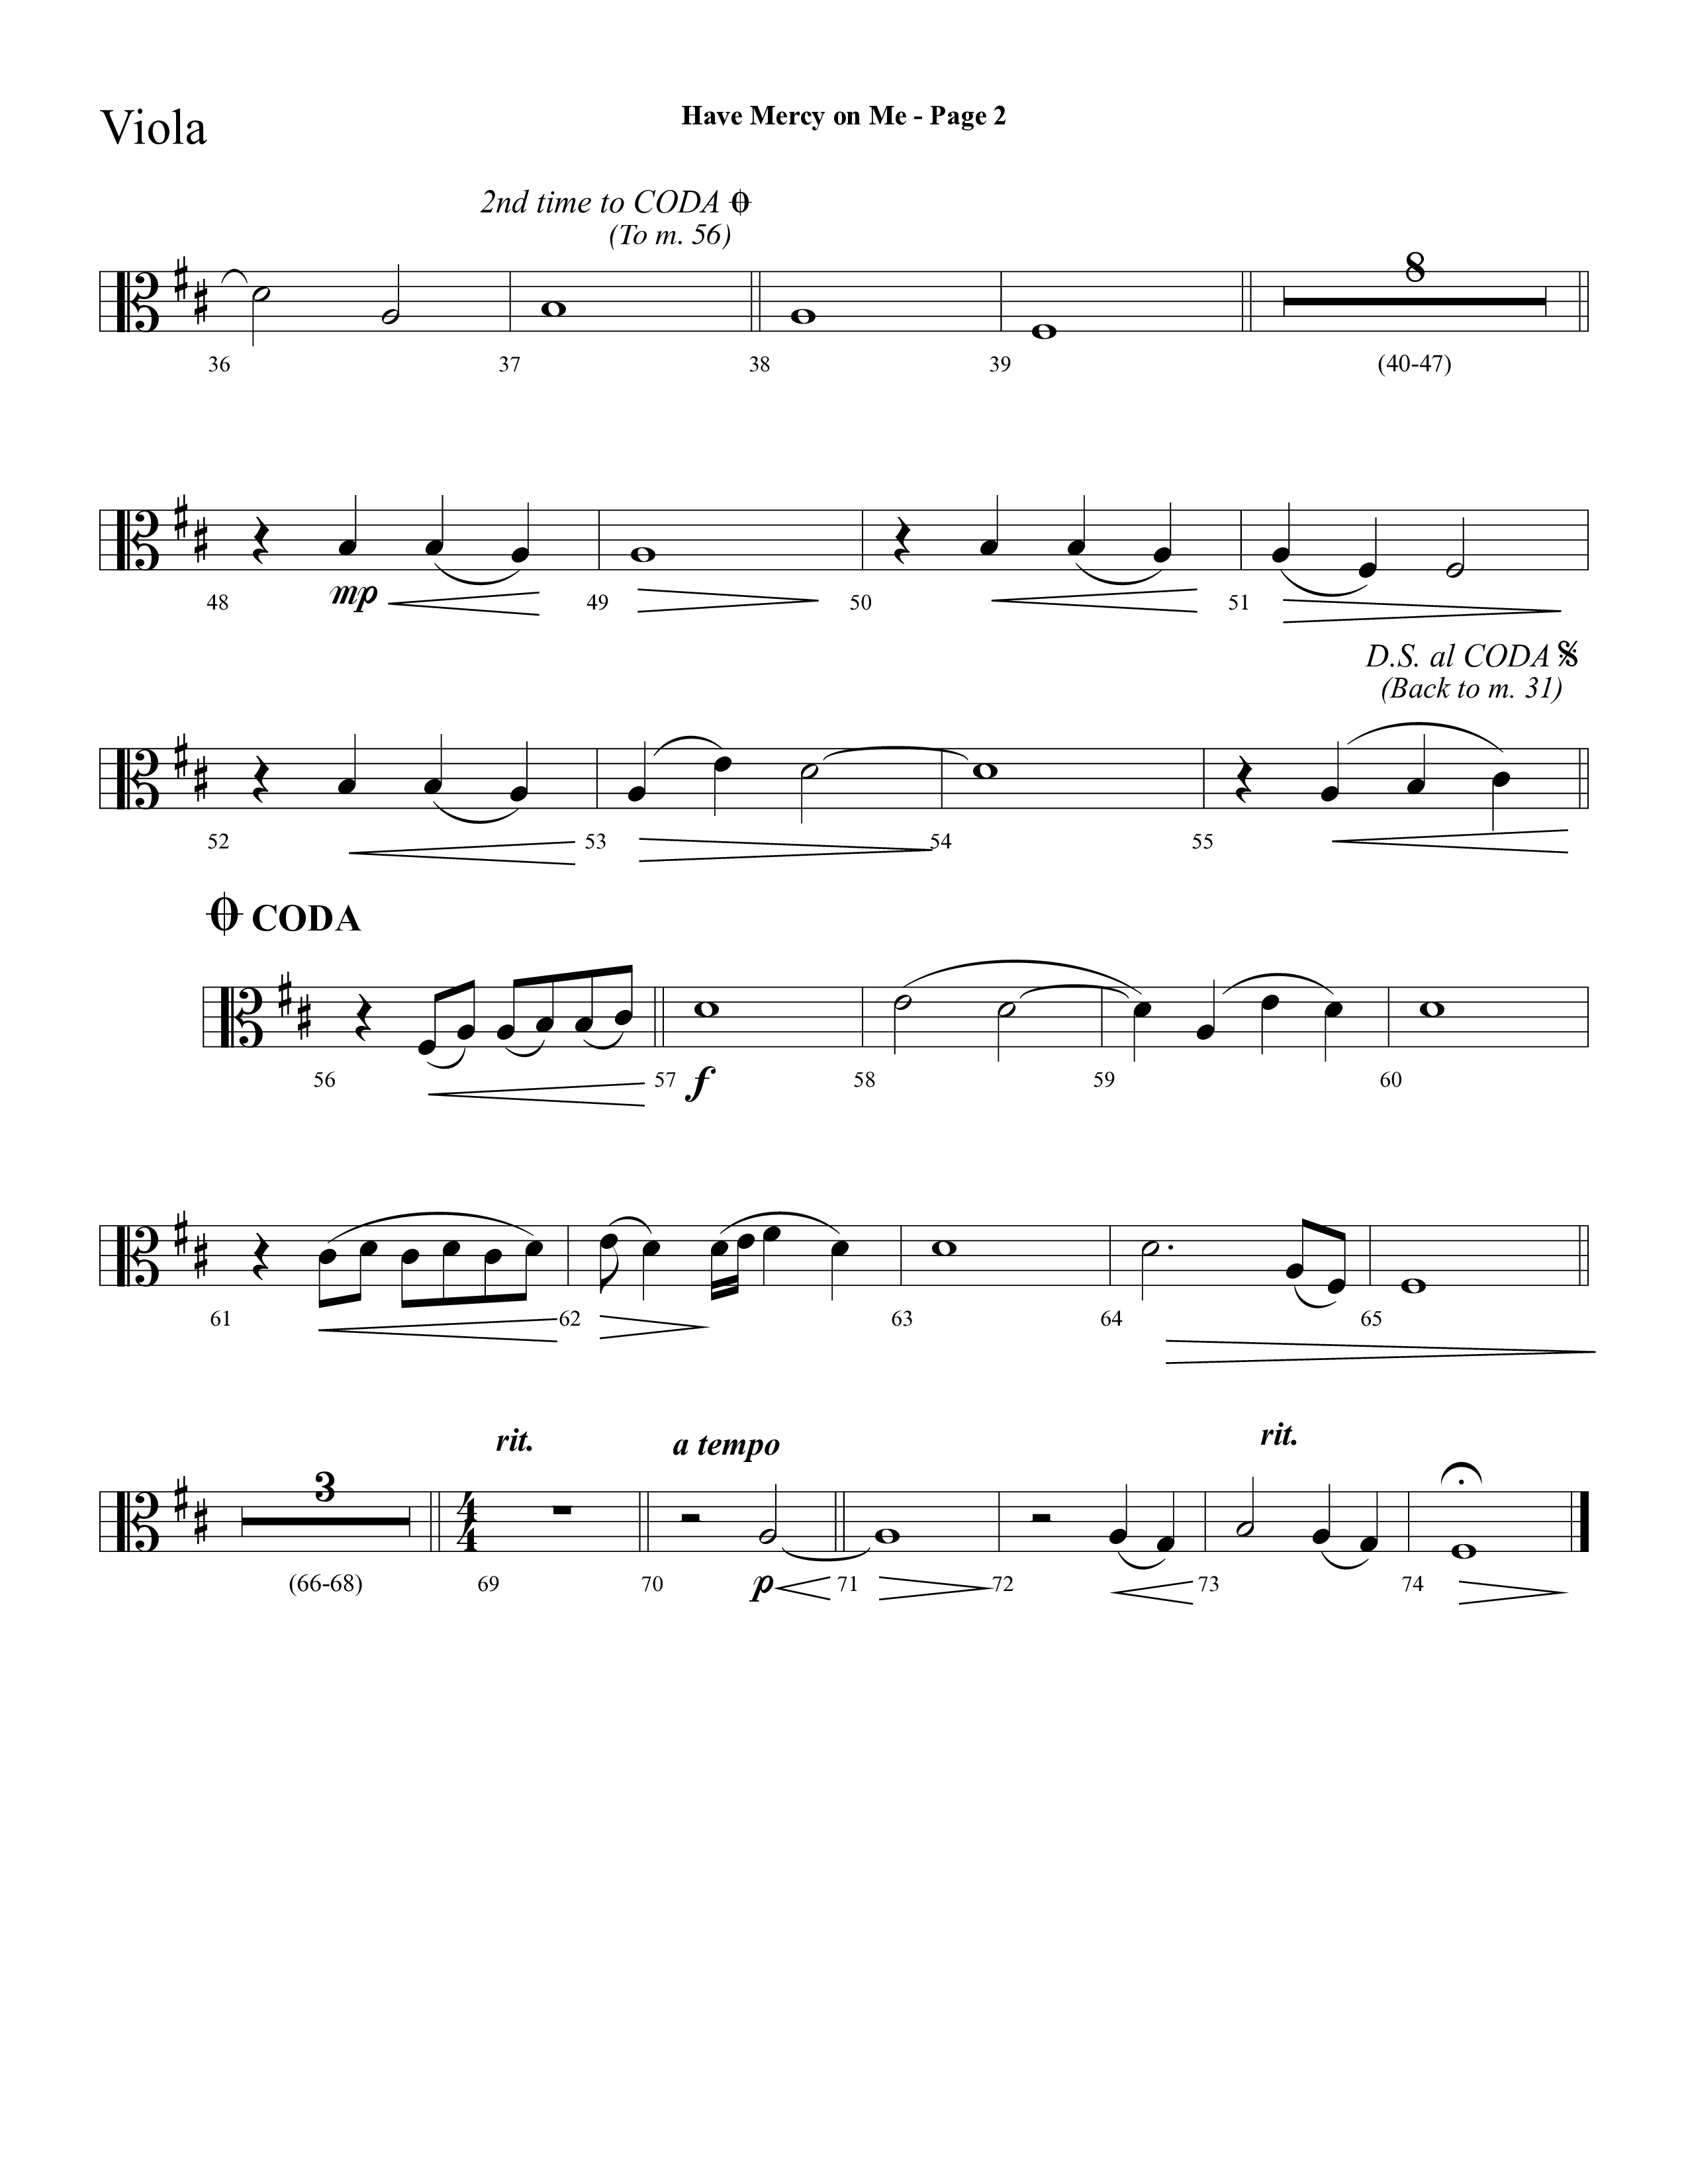 Have Mercy On Me (Choral Anthem SATB) Viola (Lifeway Choral / Arr. Phillip Keveren / Orch. Stephen K. Hand)